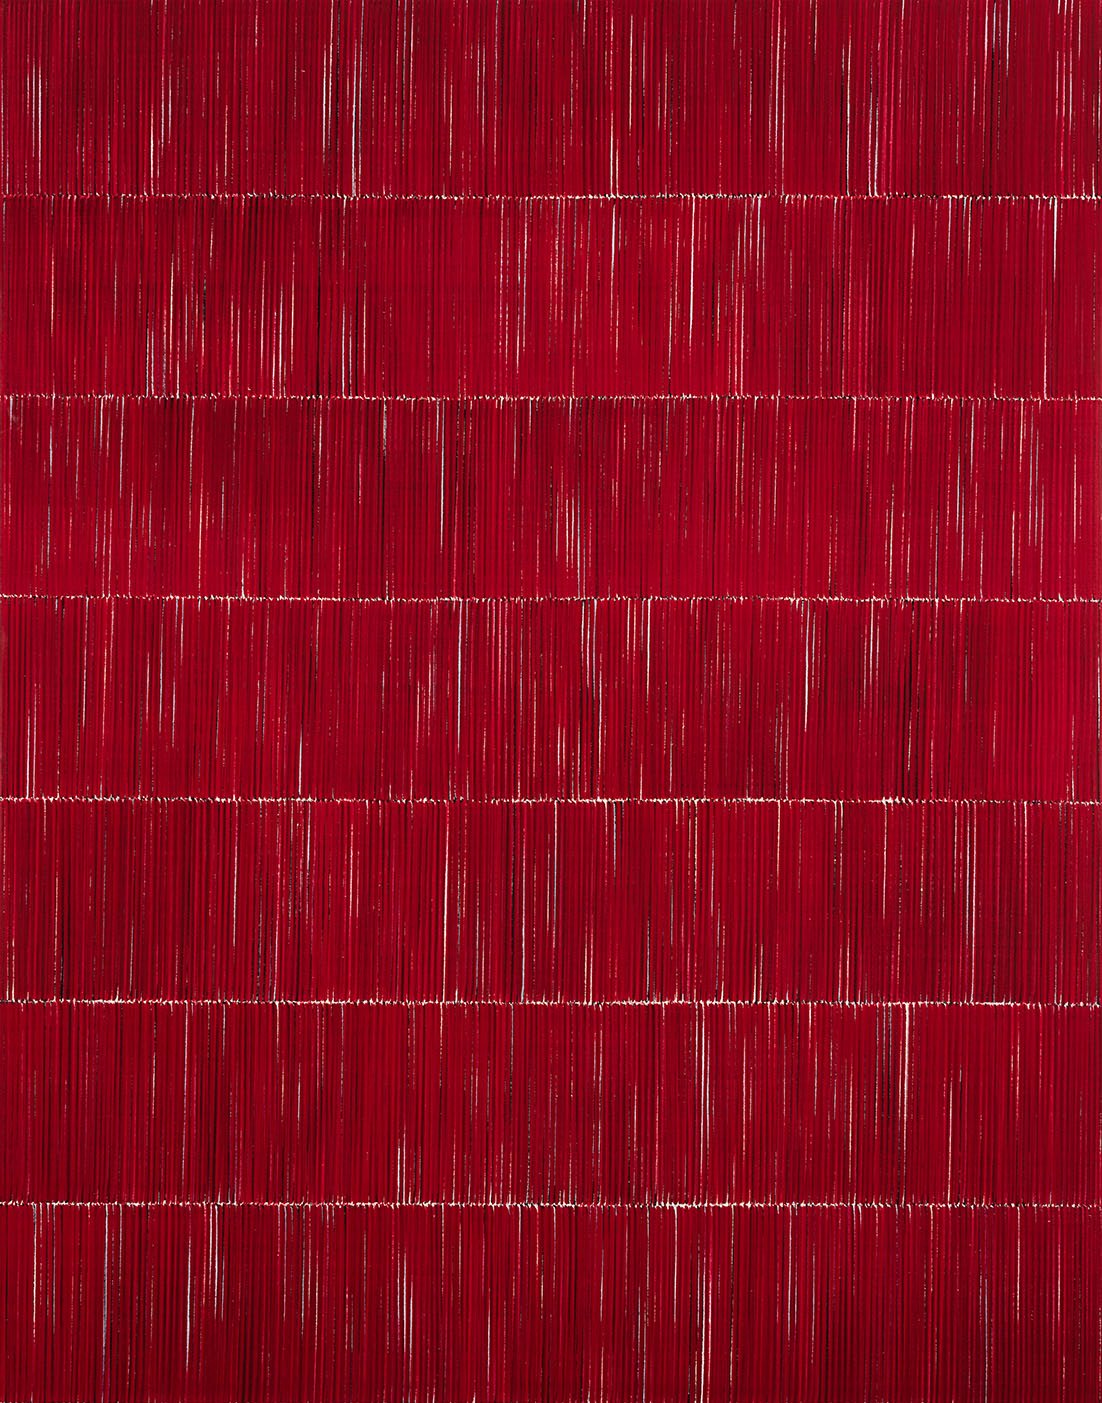 Nikola Dimitrov, KlangRaum X, 2021, Pigmente, Bindemittel auf Leinwand, 140 × 110 cm